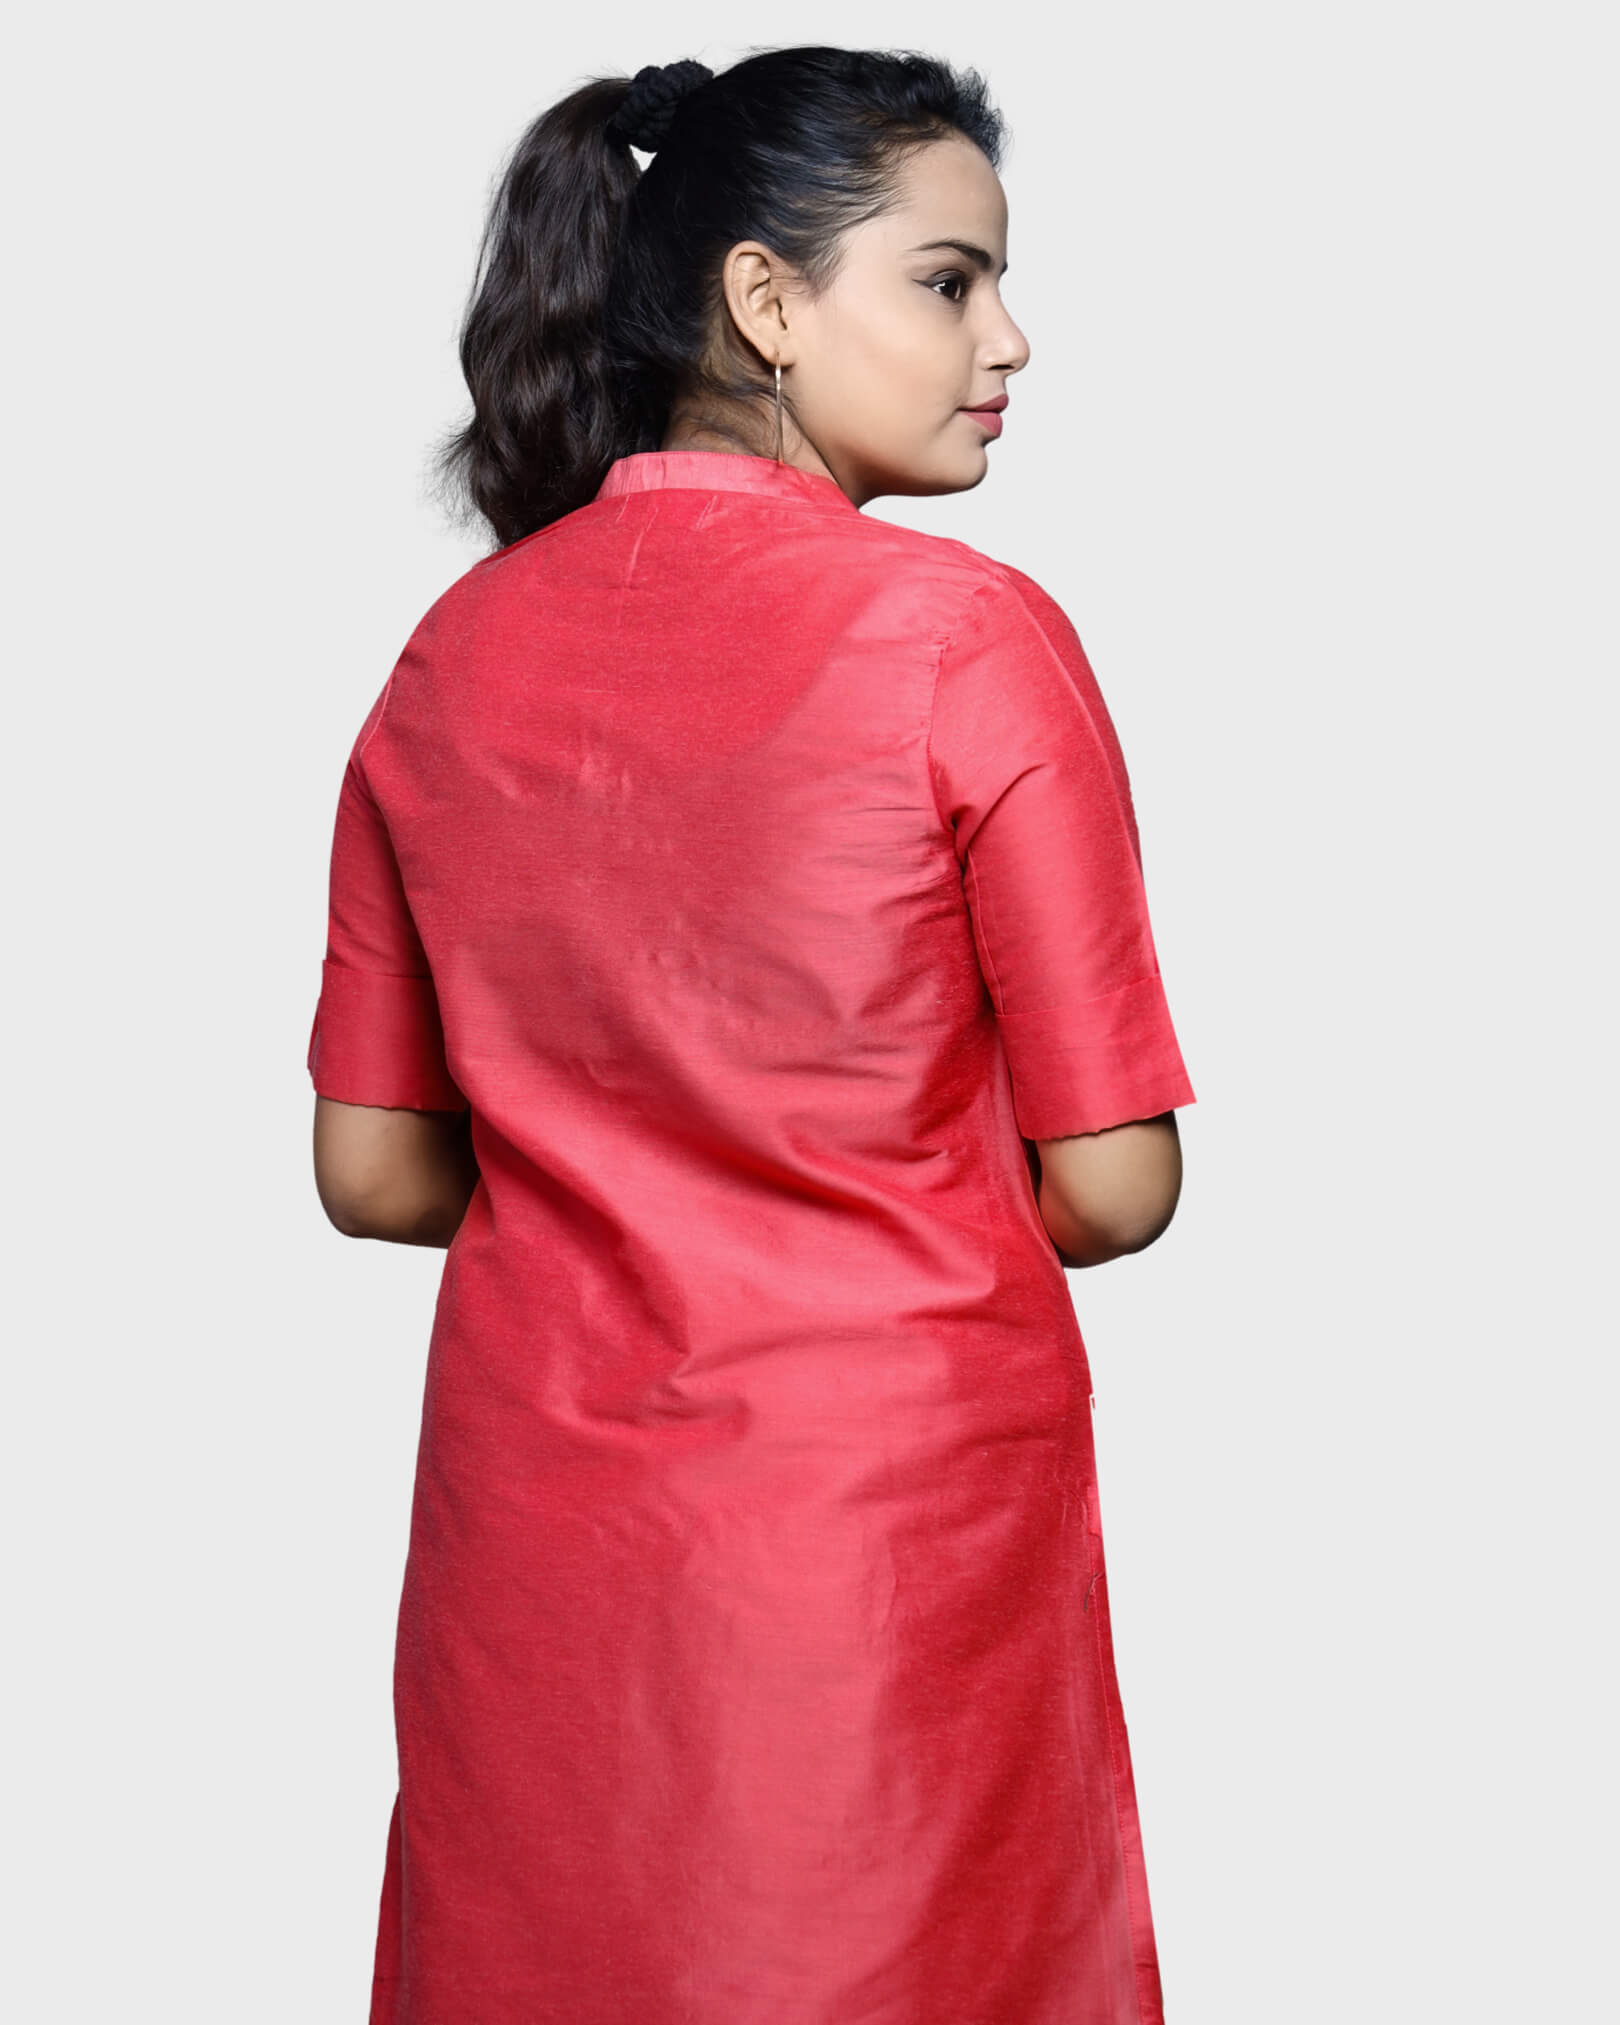 Silkfab Women's Banarasi Silk Strawberry Solid Kurti Pant Set - SILKFAB